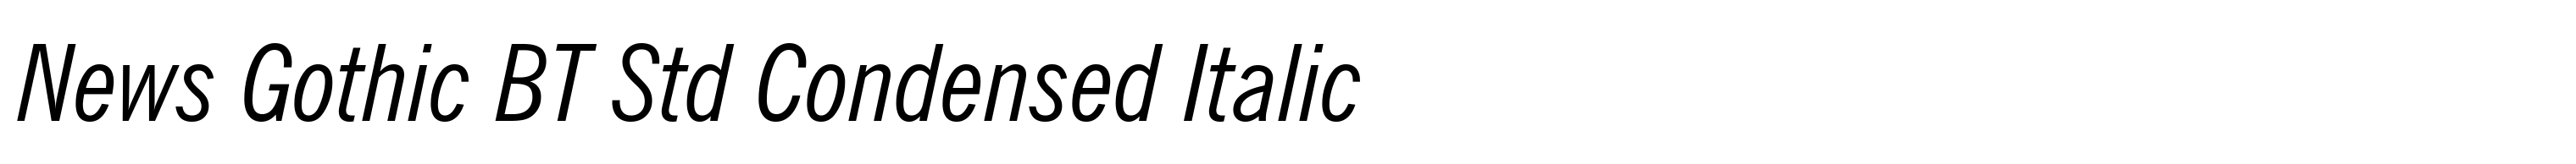 News Gothic BT Std Condensed Italic